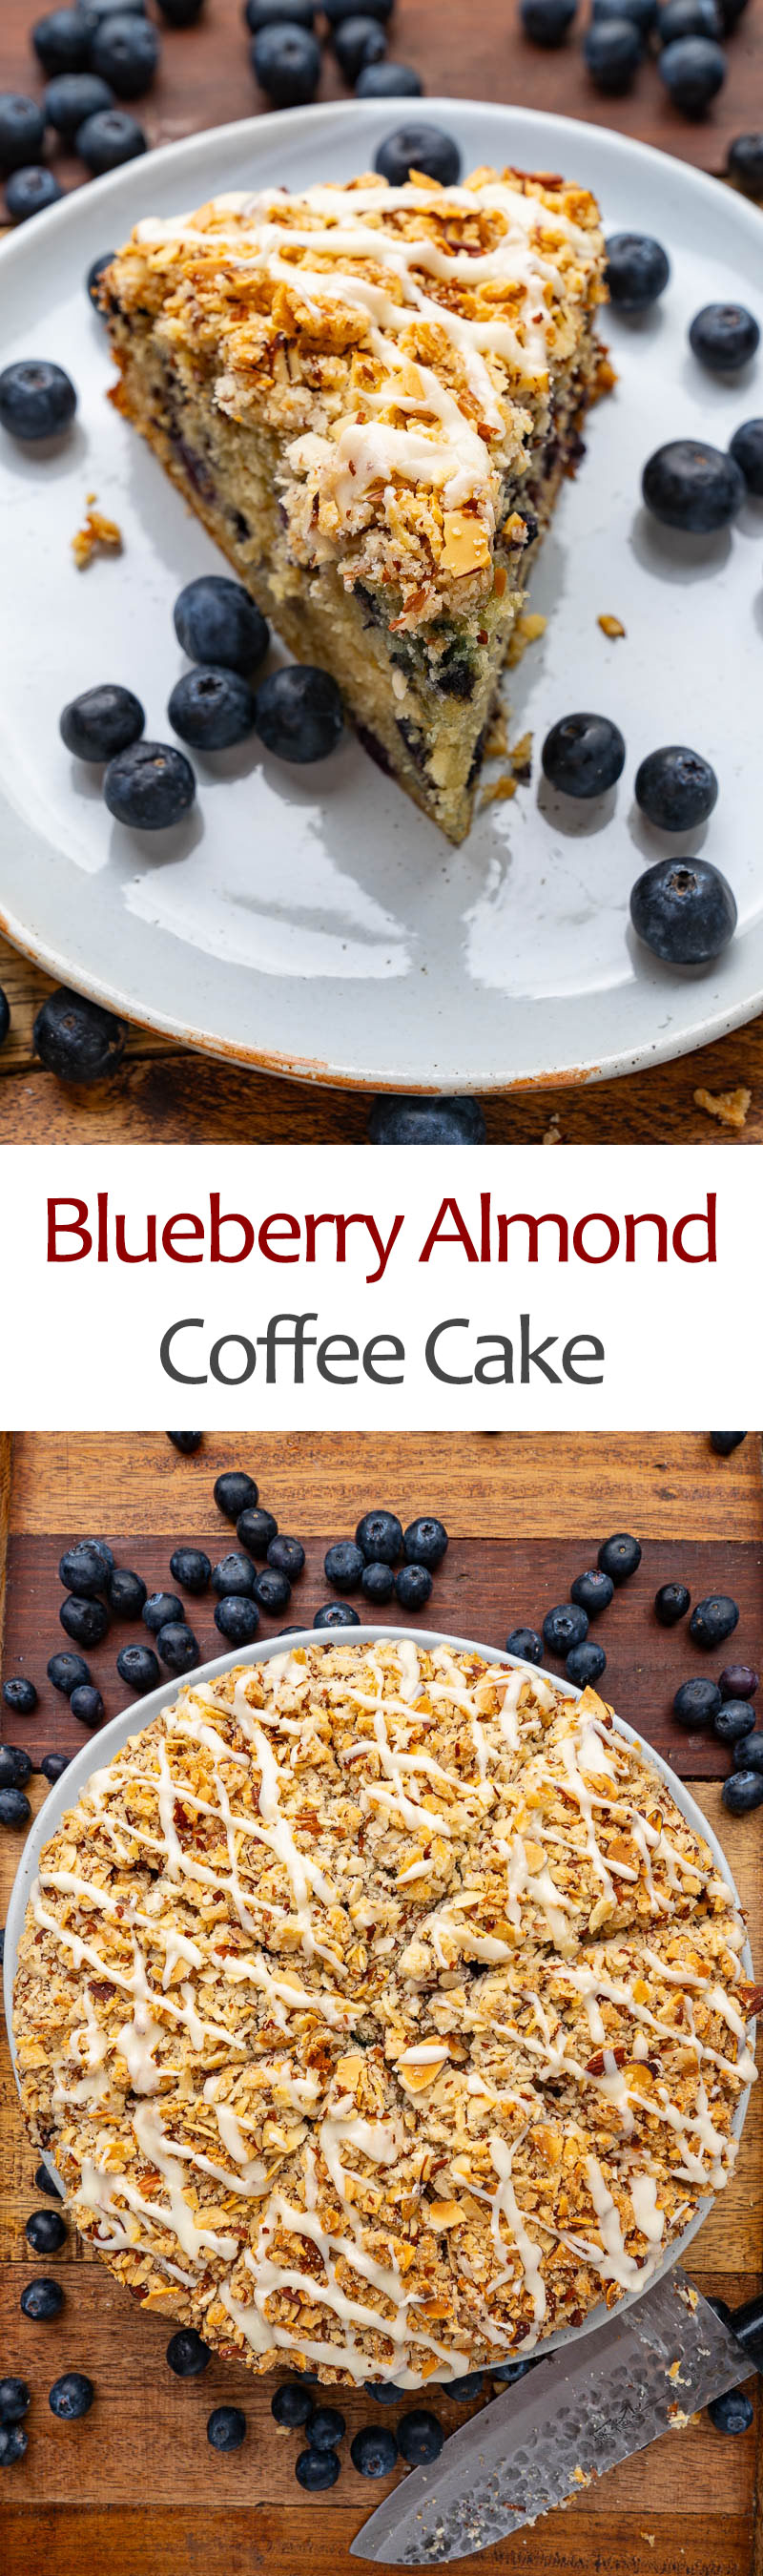 Blueberry Almond Coffee Cake